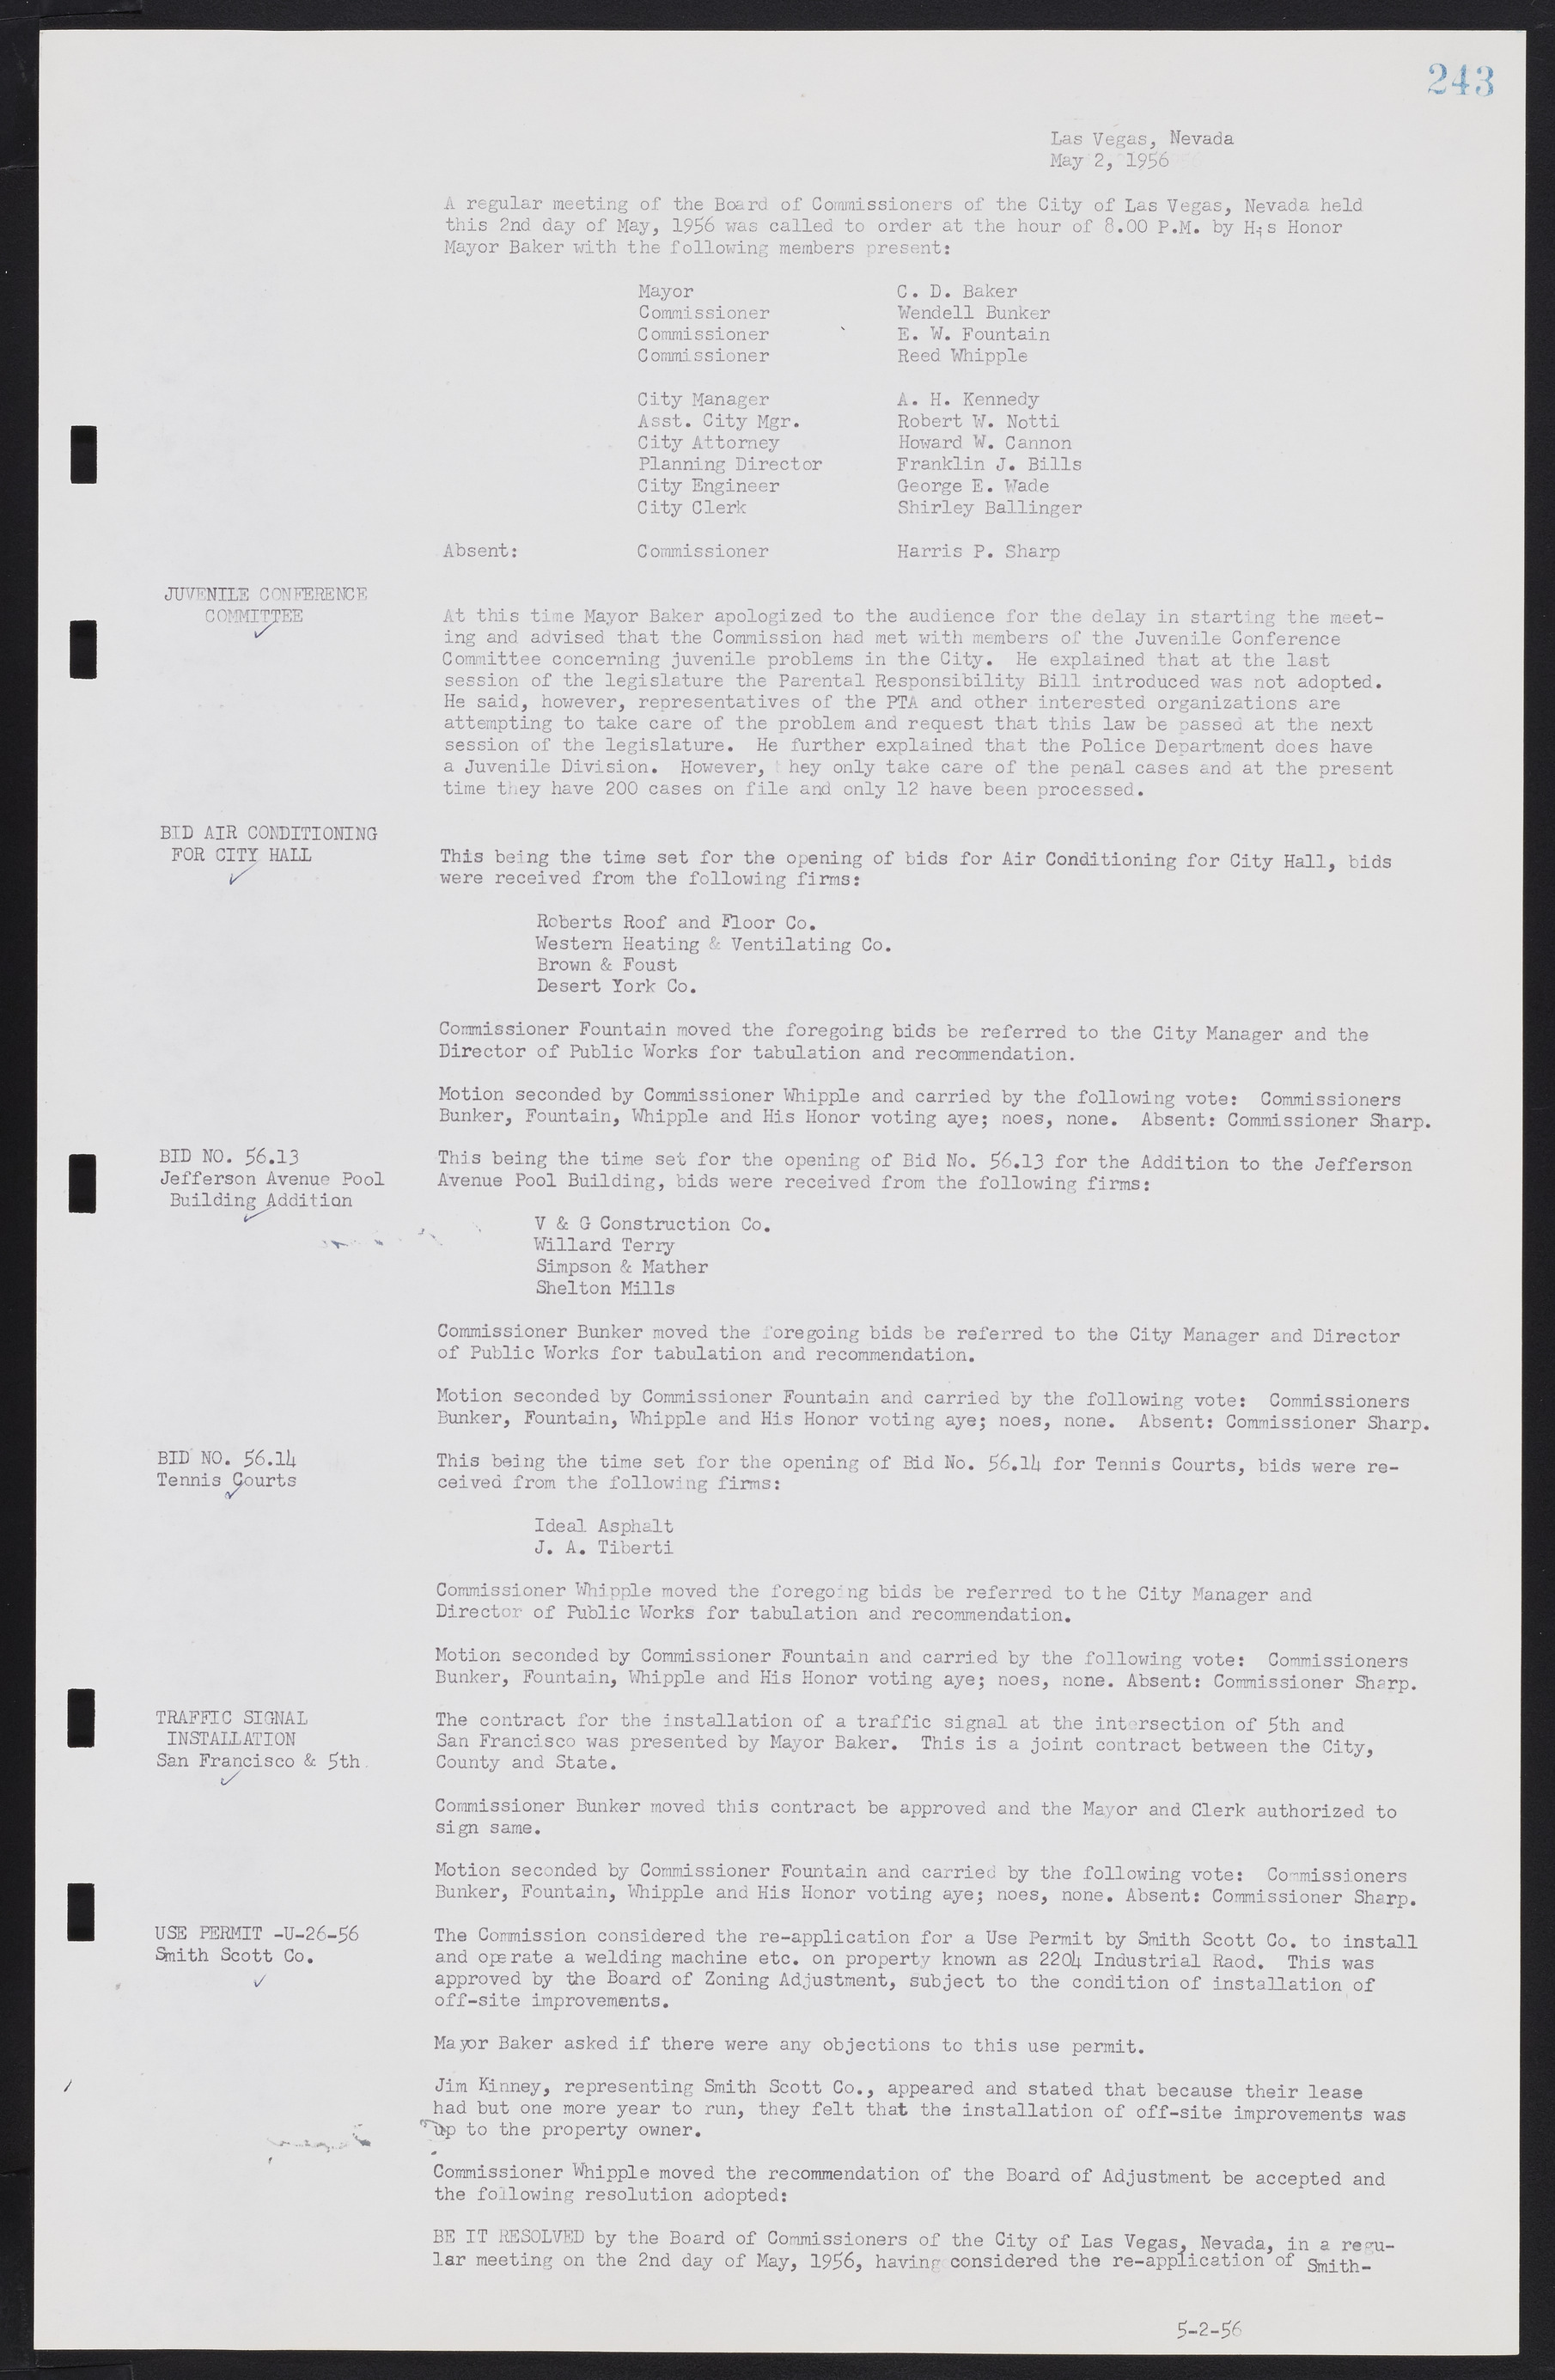 Las Vegas City Commission Minutes, September 21, 1955 to November 20, 1957, lvc000010-263